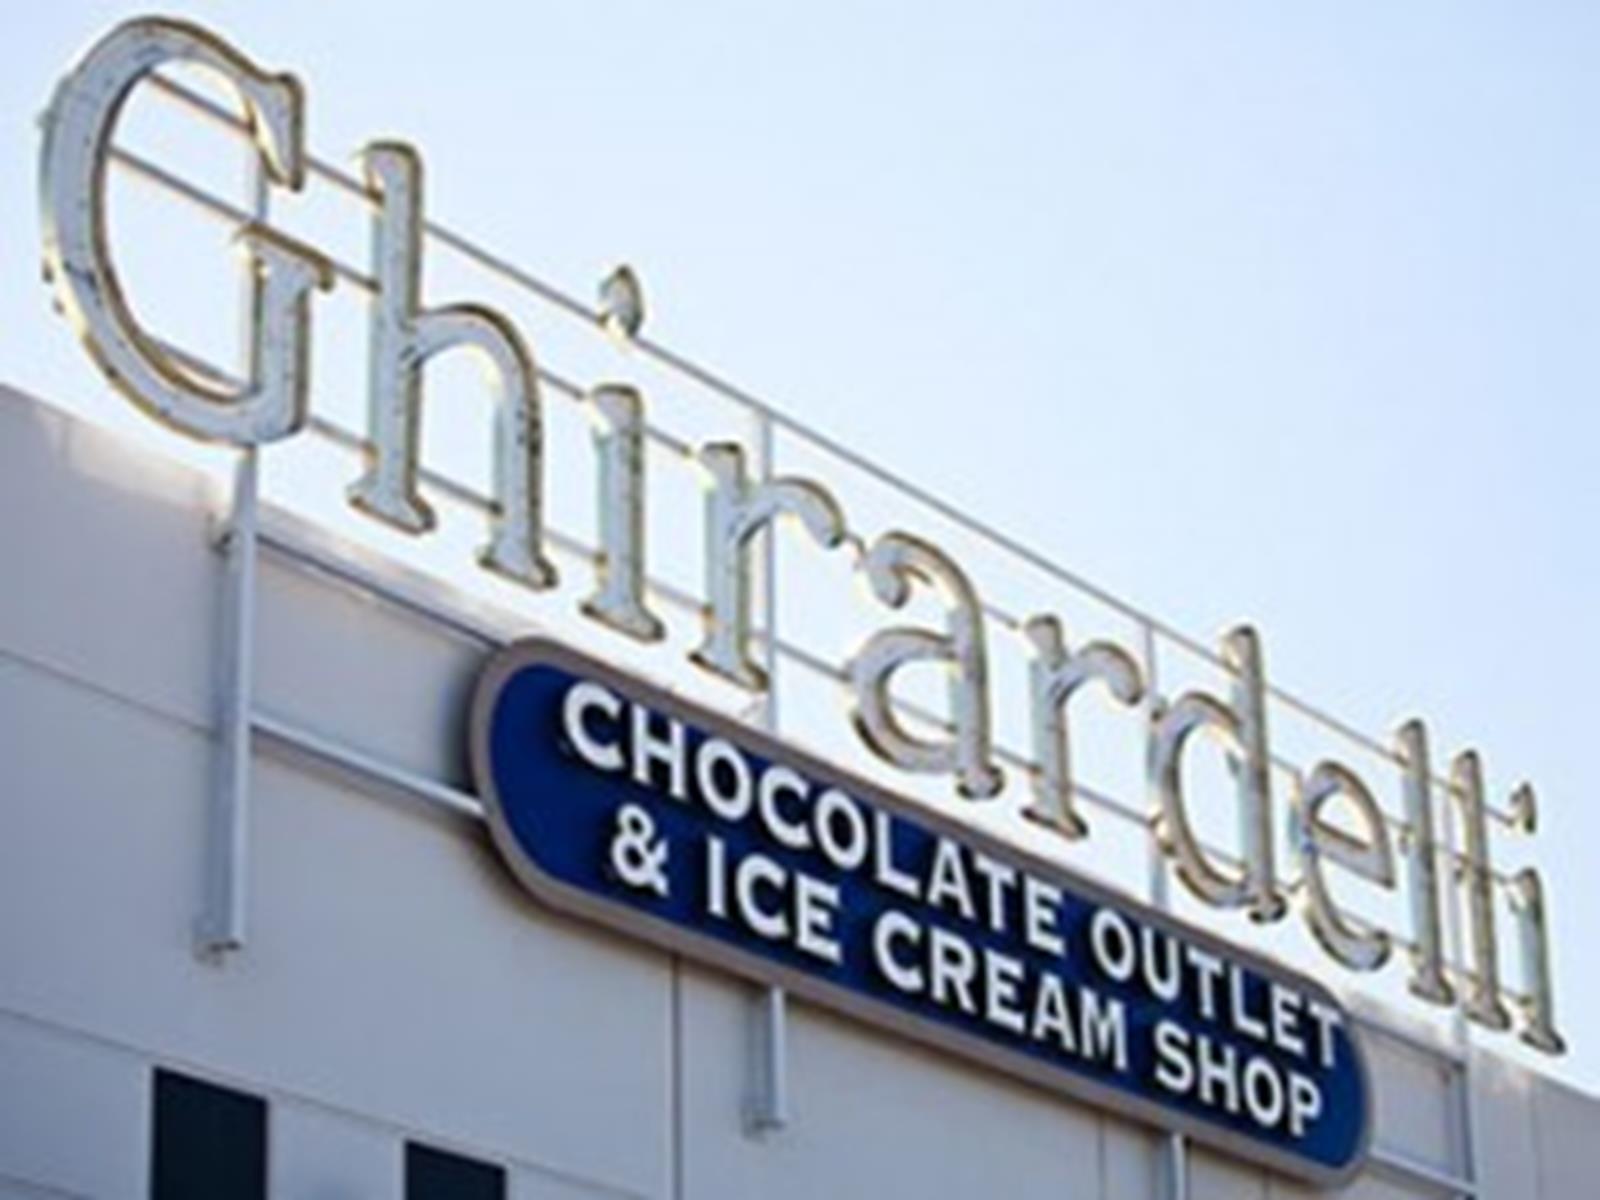 Ghirardelli Ice Cream and Chocolate Shop